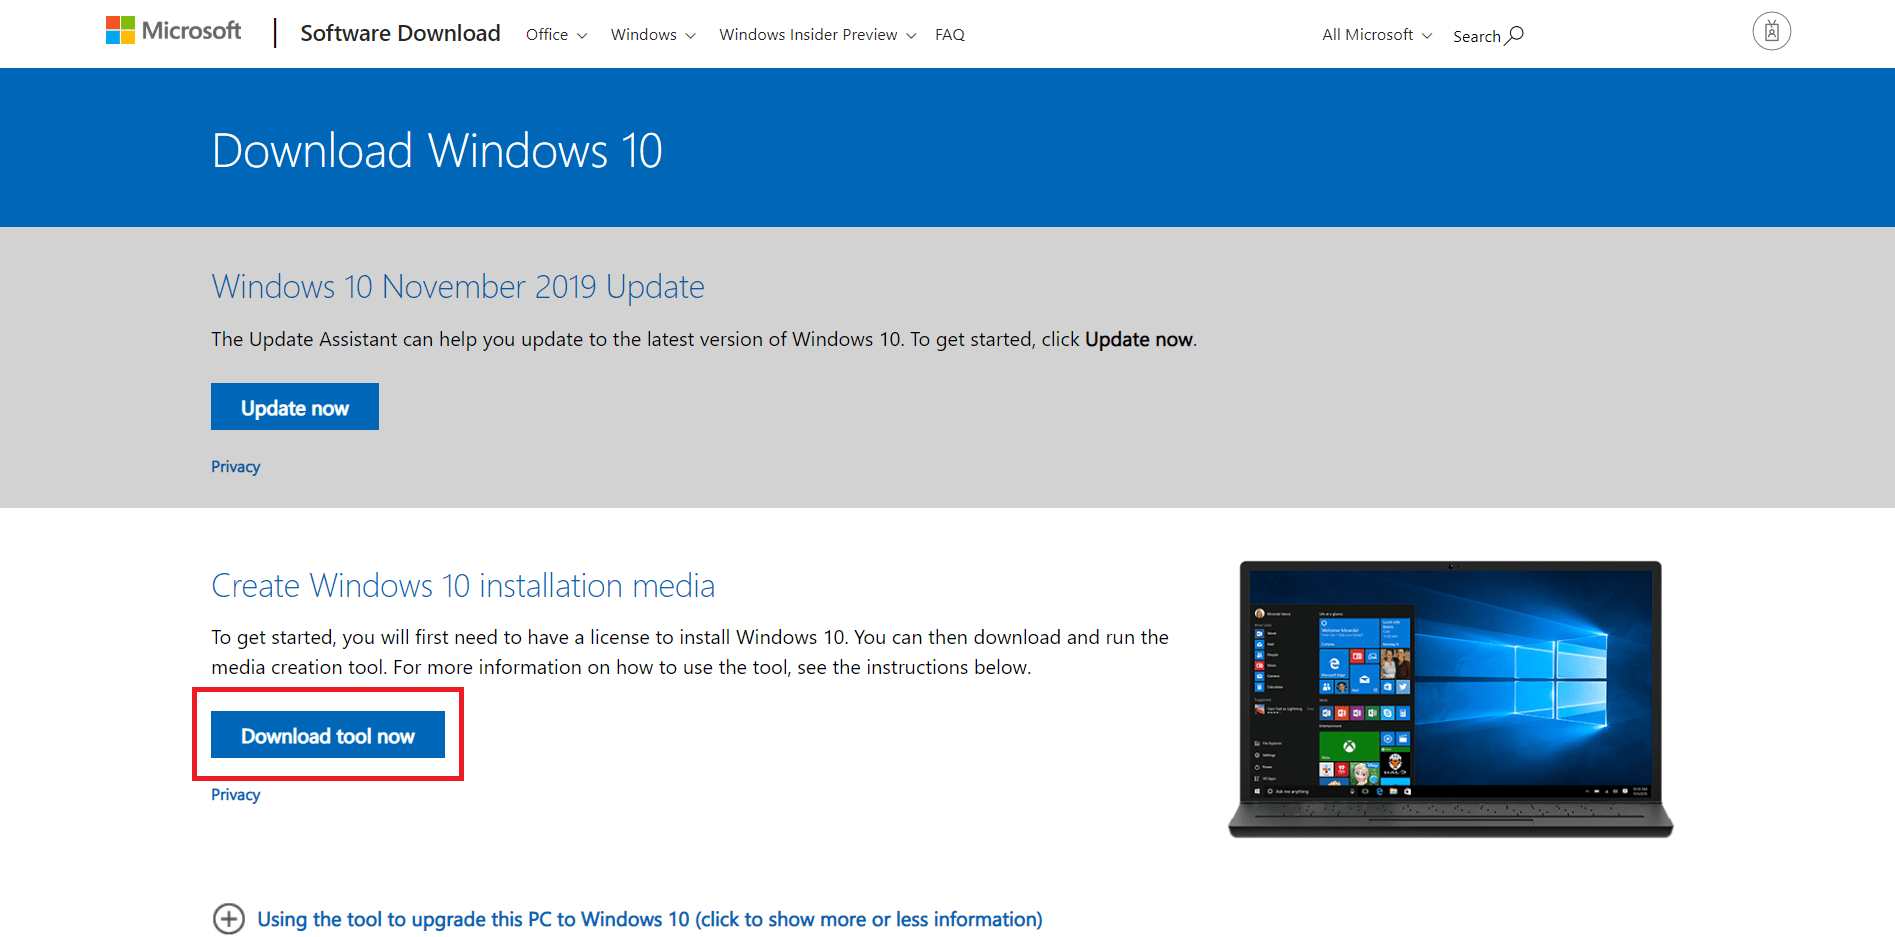 windows update error code 0x80070422